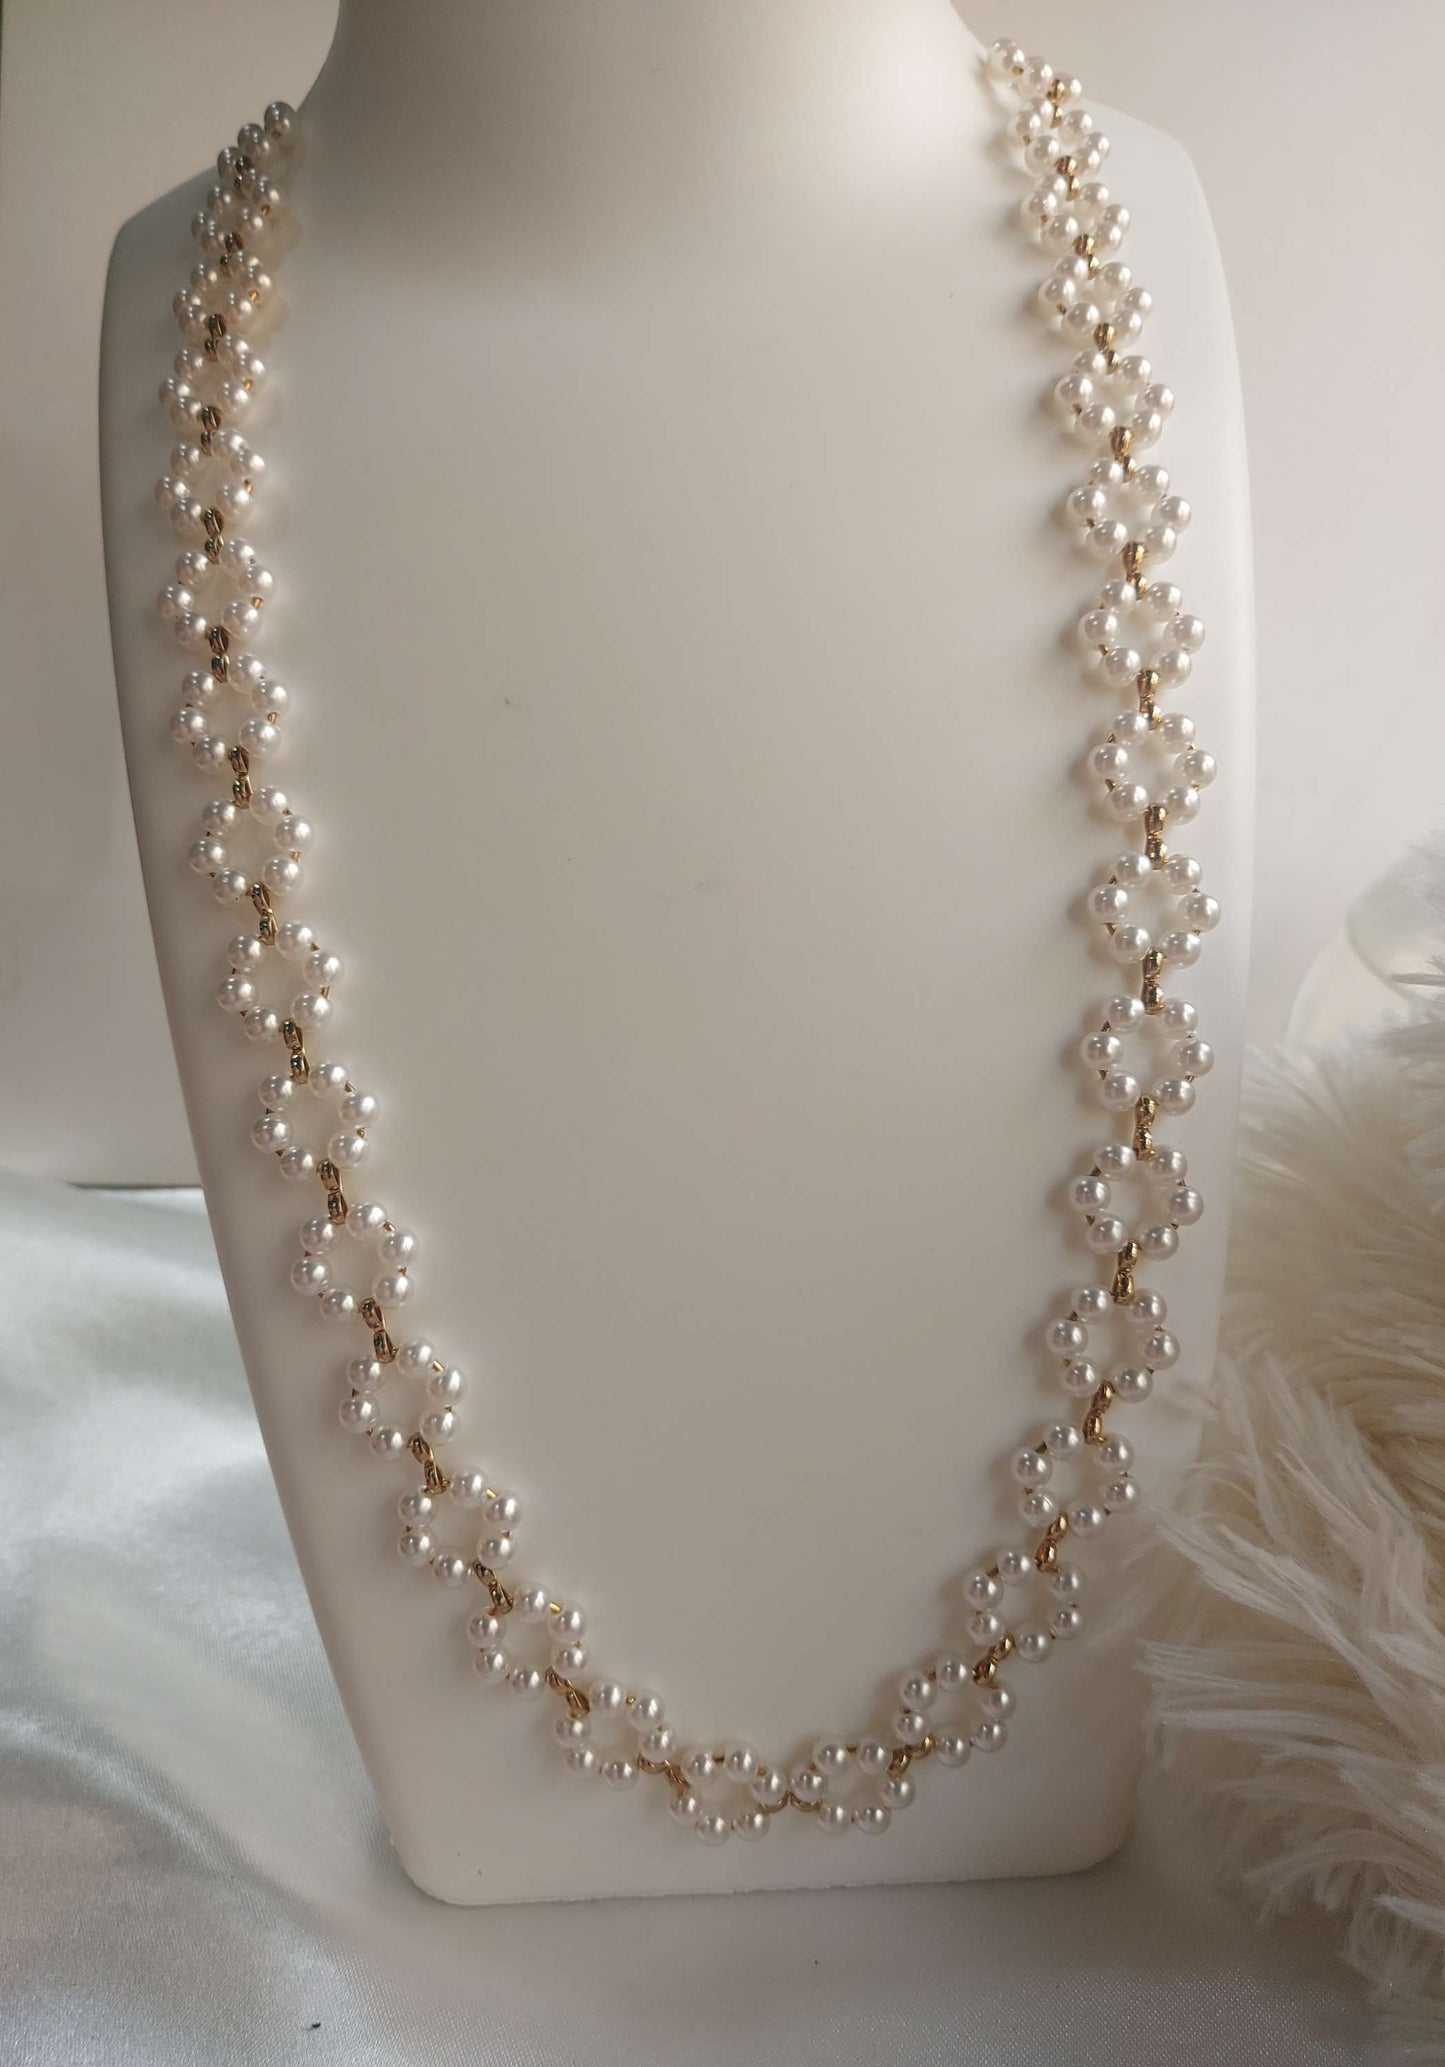 Faux pearl neckpiece